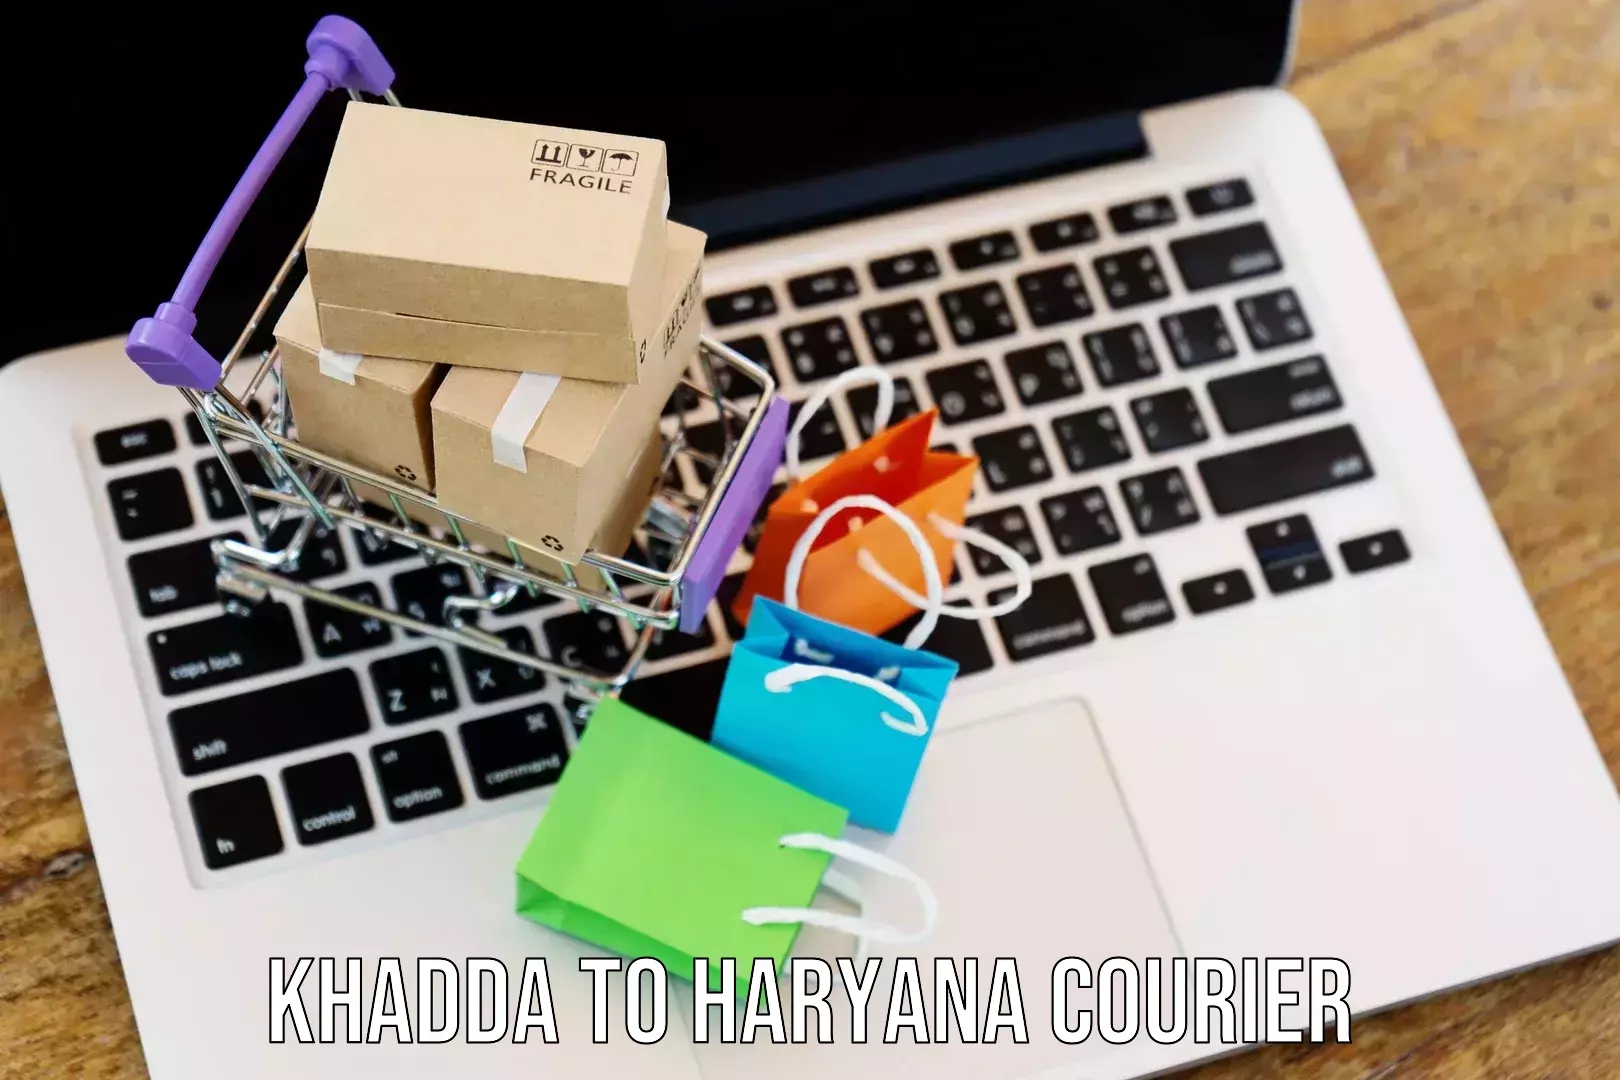 International courier networks Khadda to Haryana